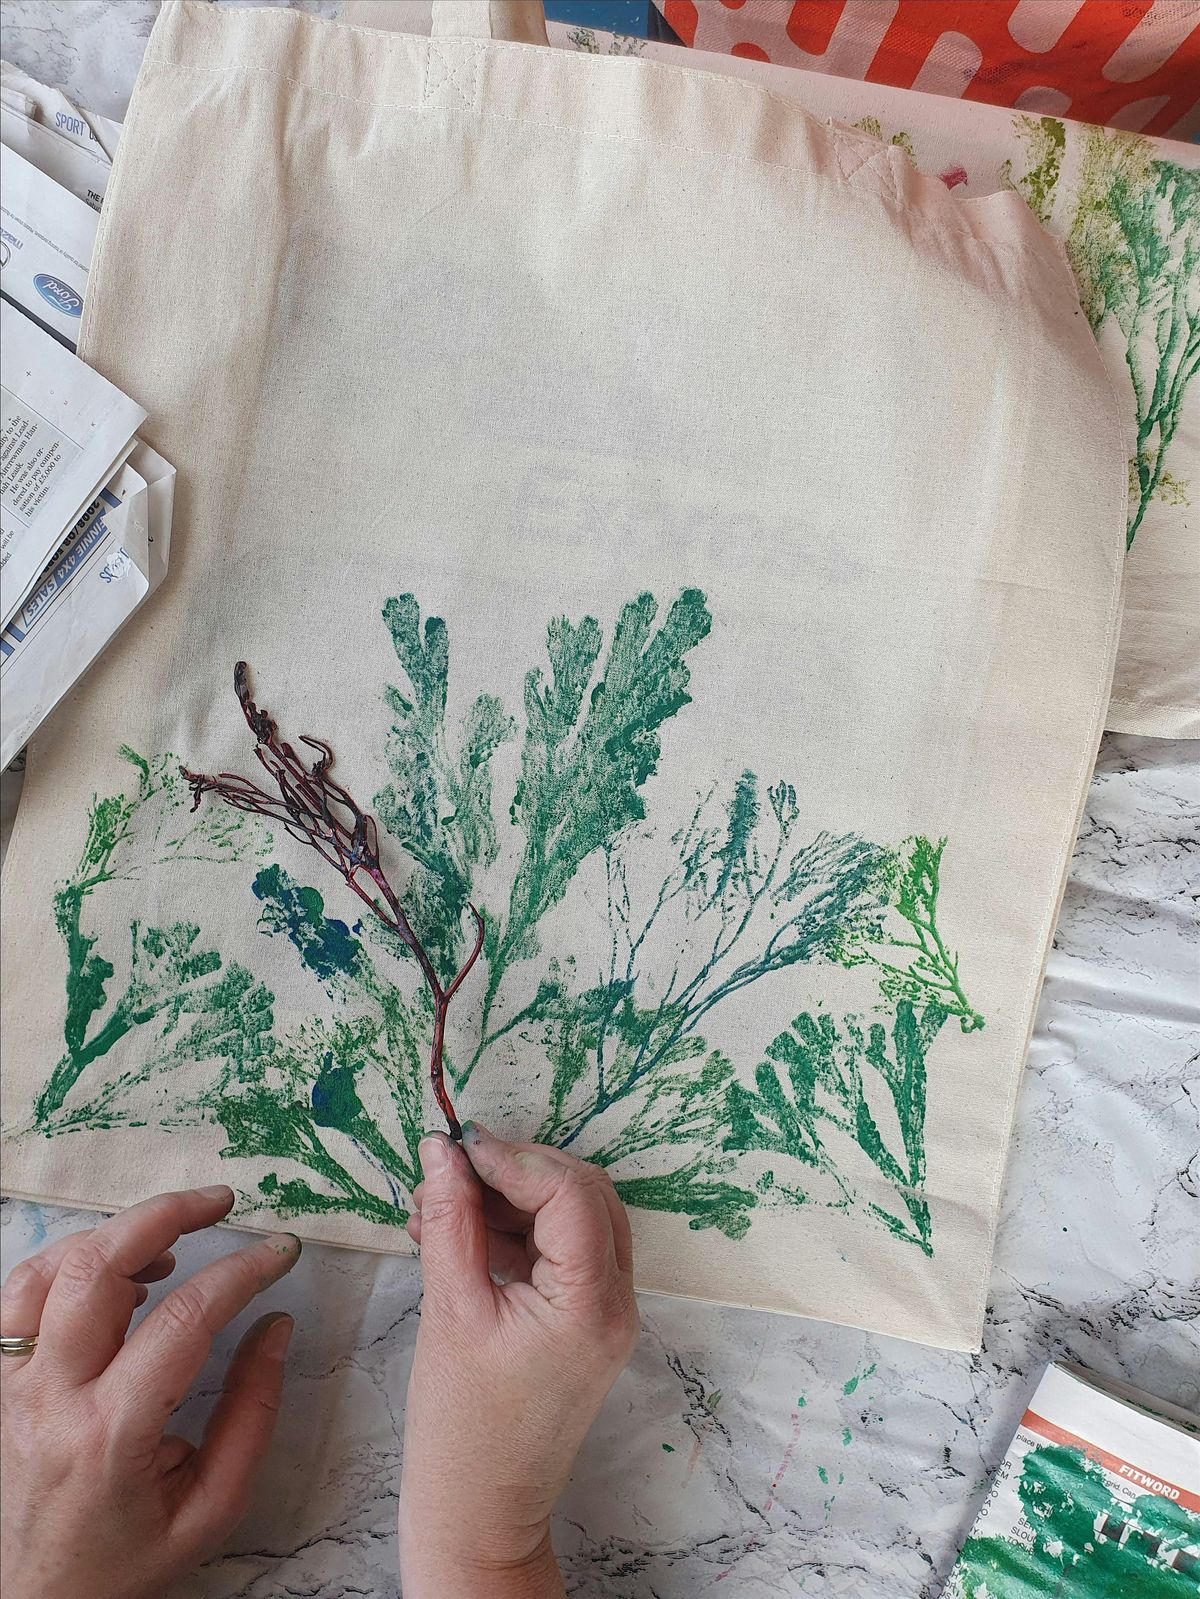 Seaweed printing on textiles